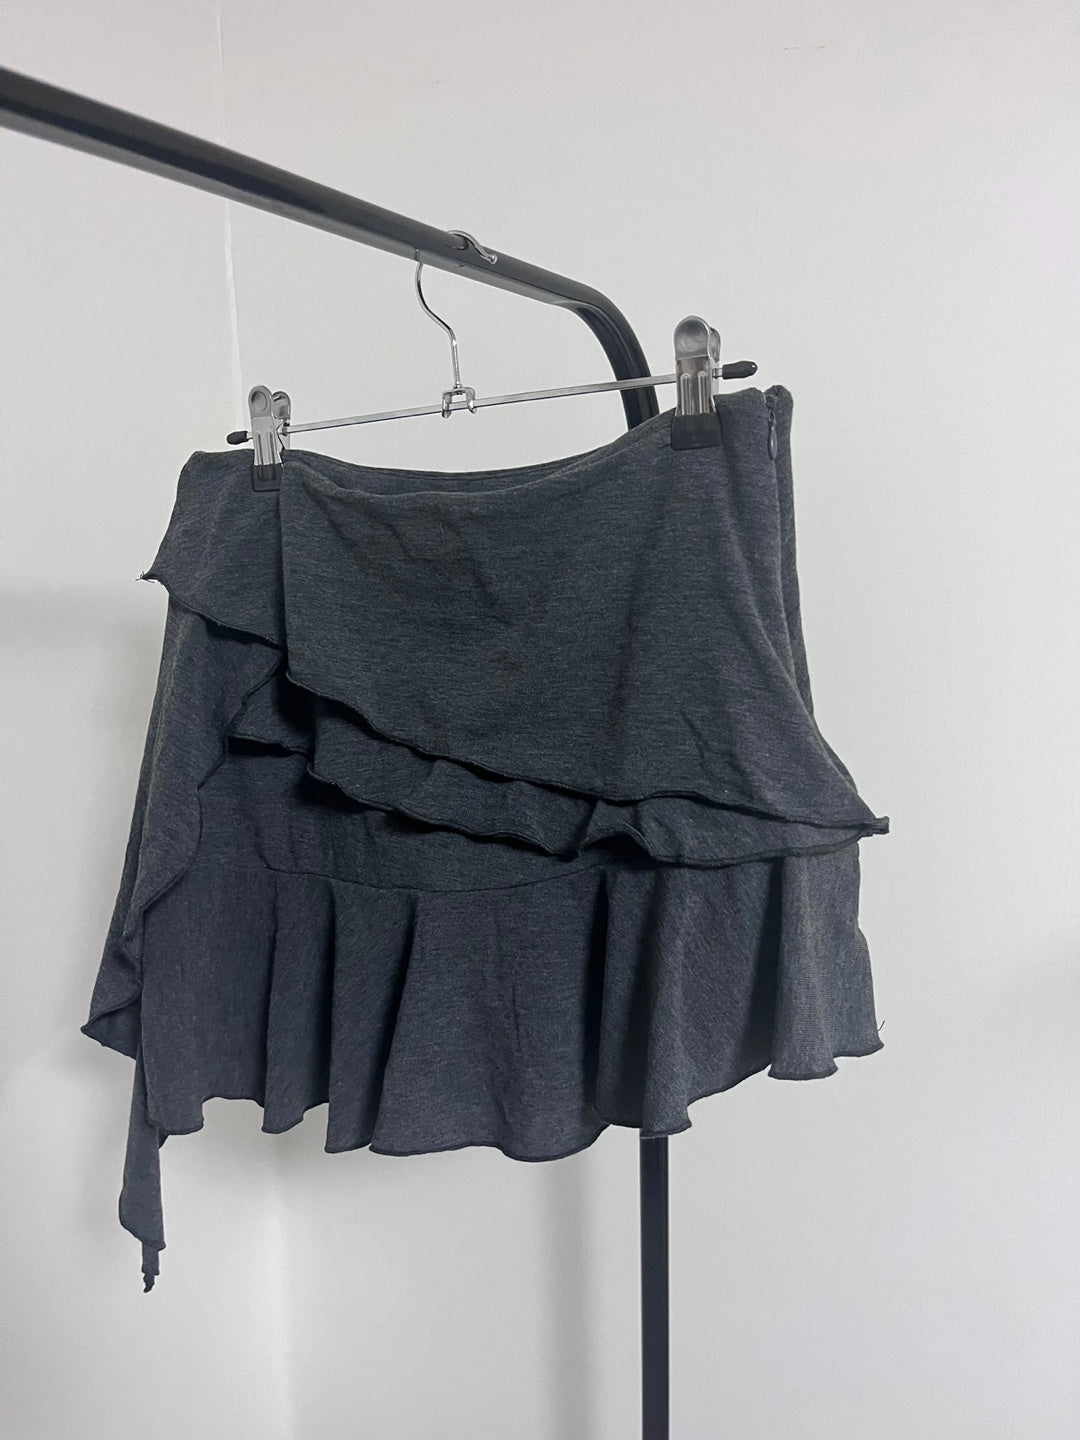 : Layered Unbalanced Ballet Core Short Skirt